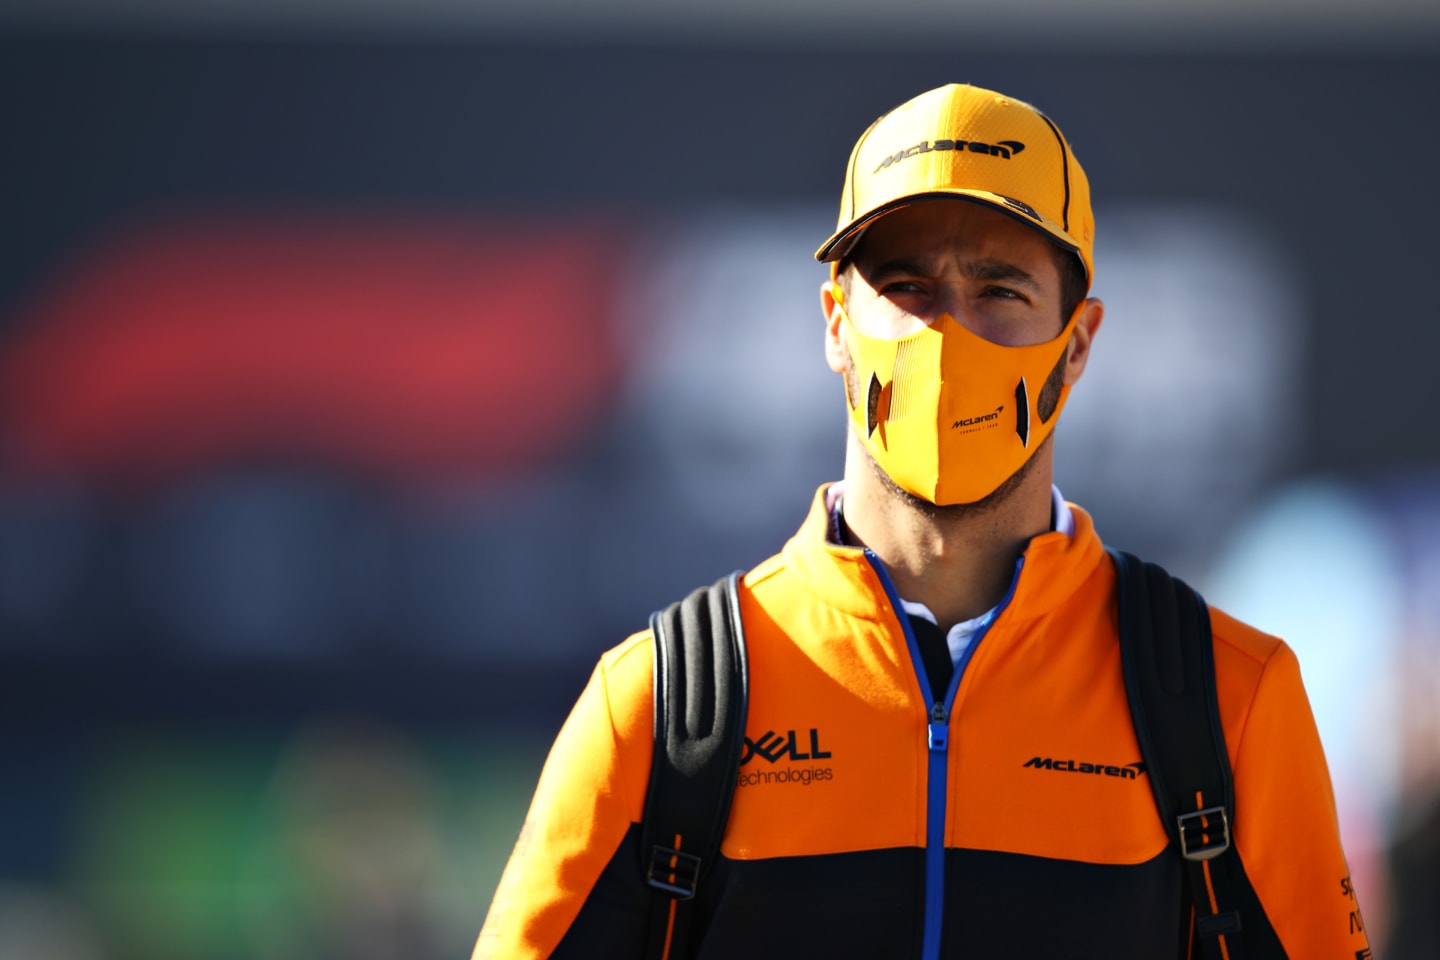 PORTIMAO, PORTUGAL - APRIL 30: Daniel Ricciardo of Australia and McLaren F1 walks in the Paddock